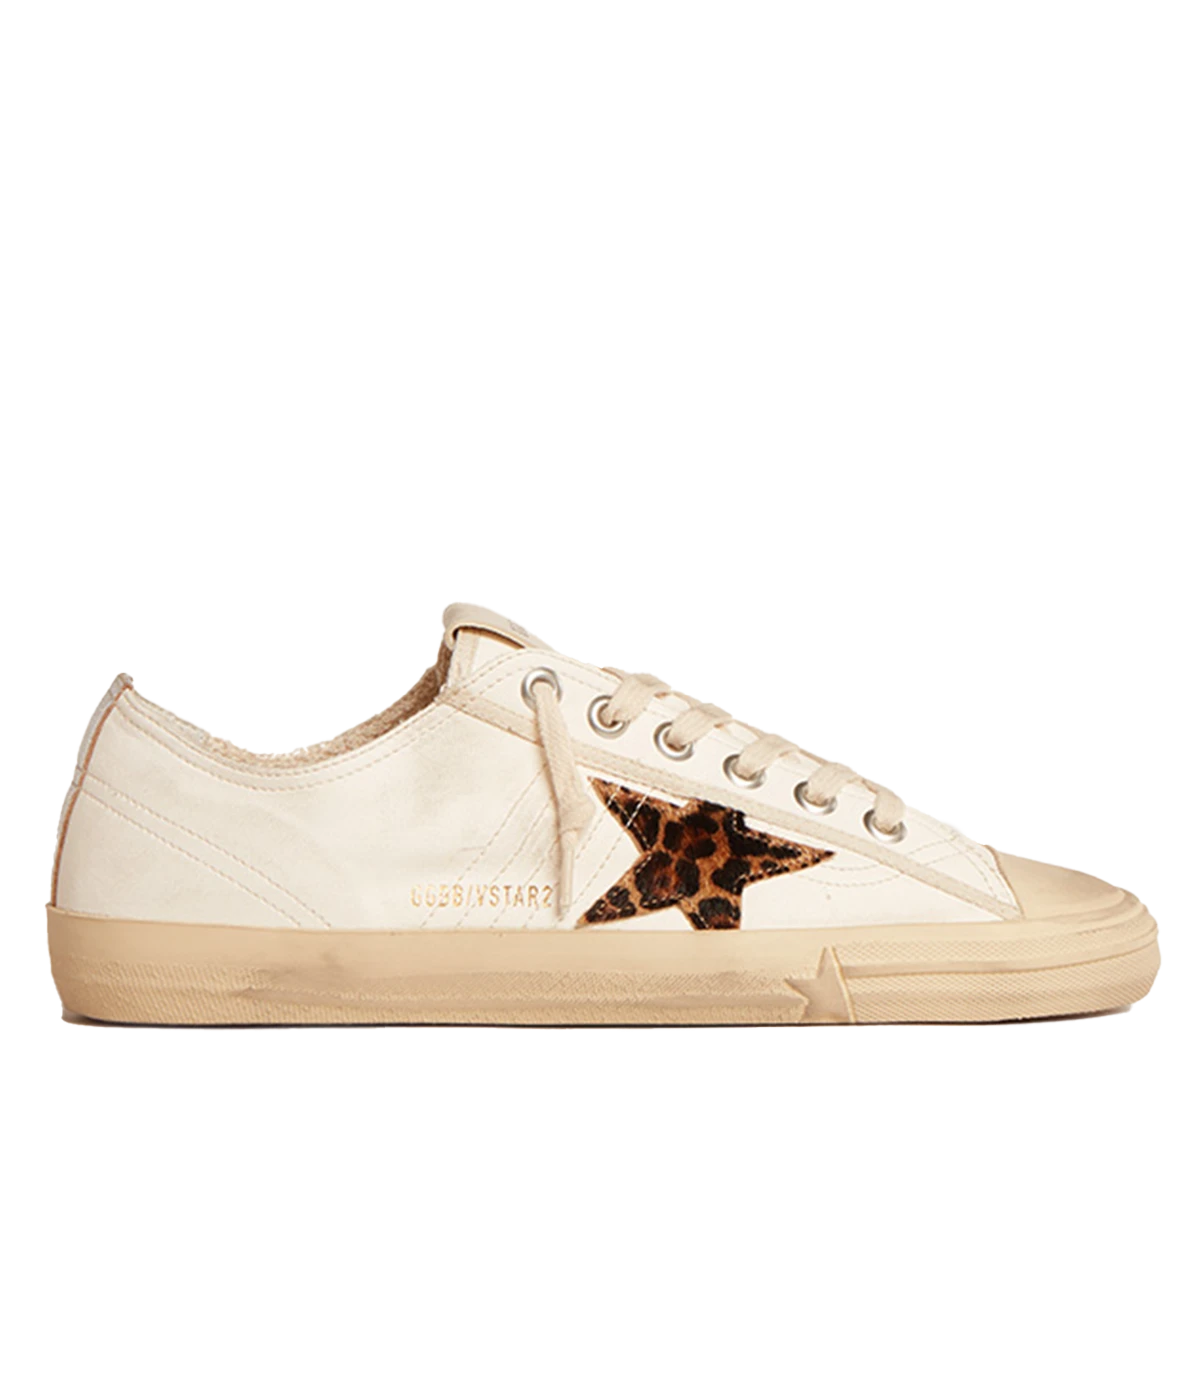 V-Star 2 Leopard Sneaker in White, Beige, Brown & Silver